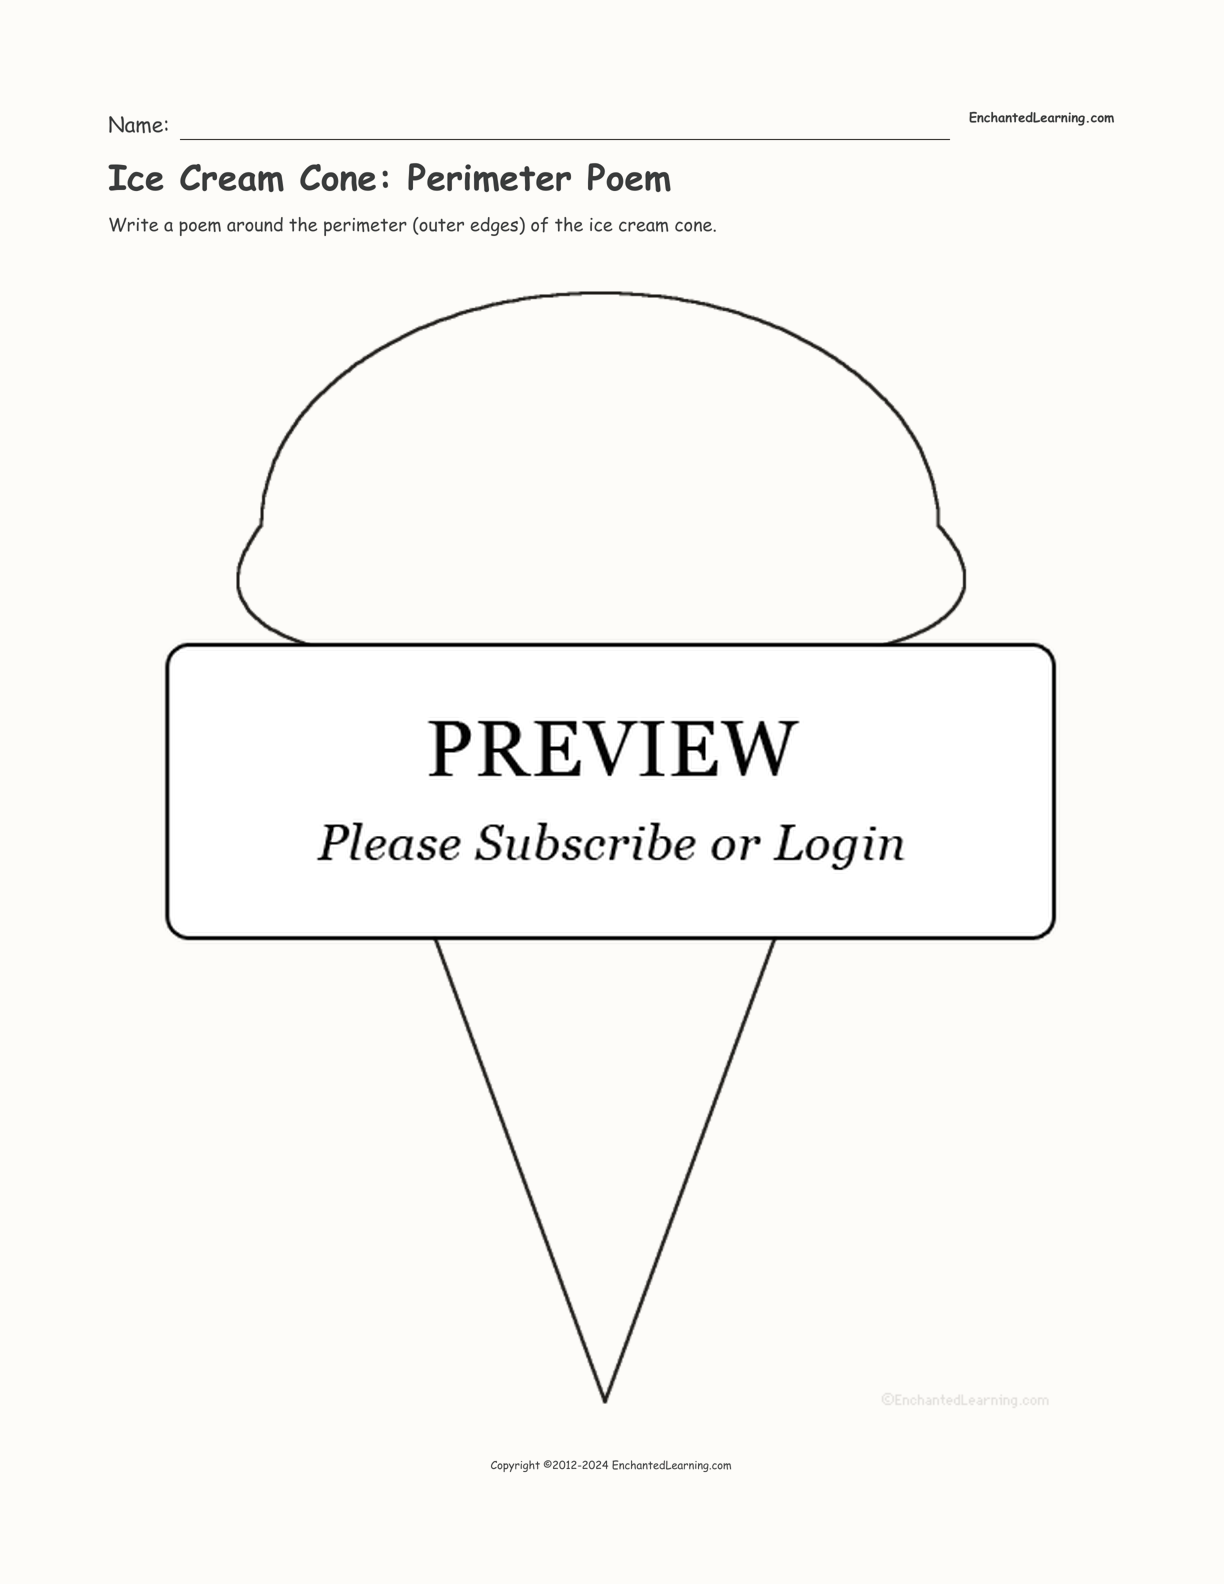 Ice Cream Cone: Perimeter Poem interactive worksheet page 1